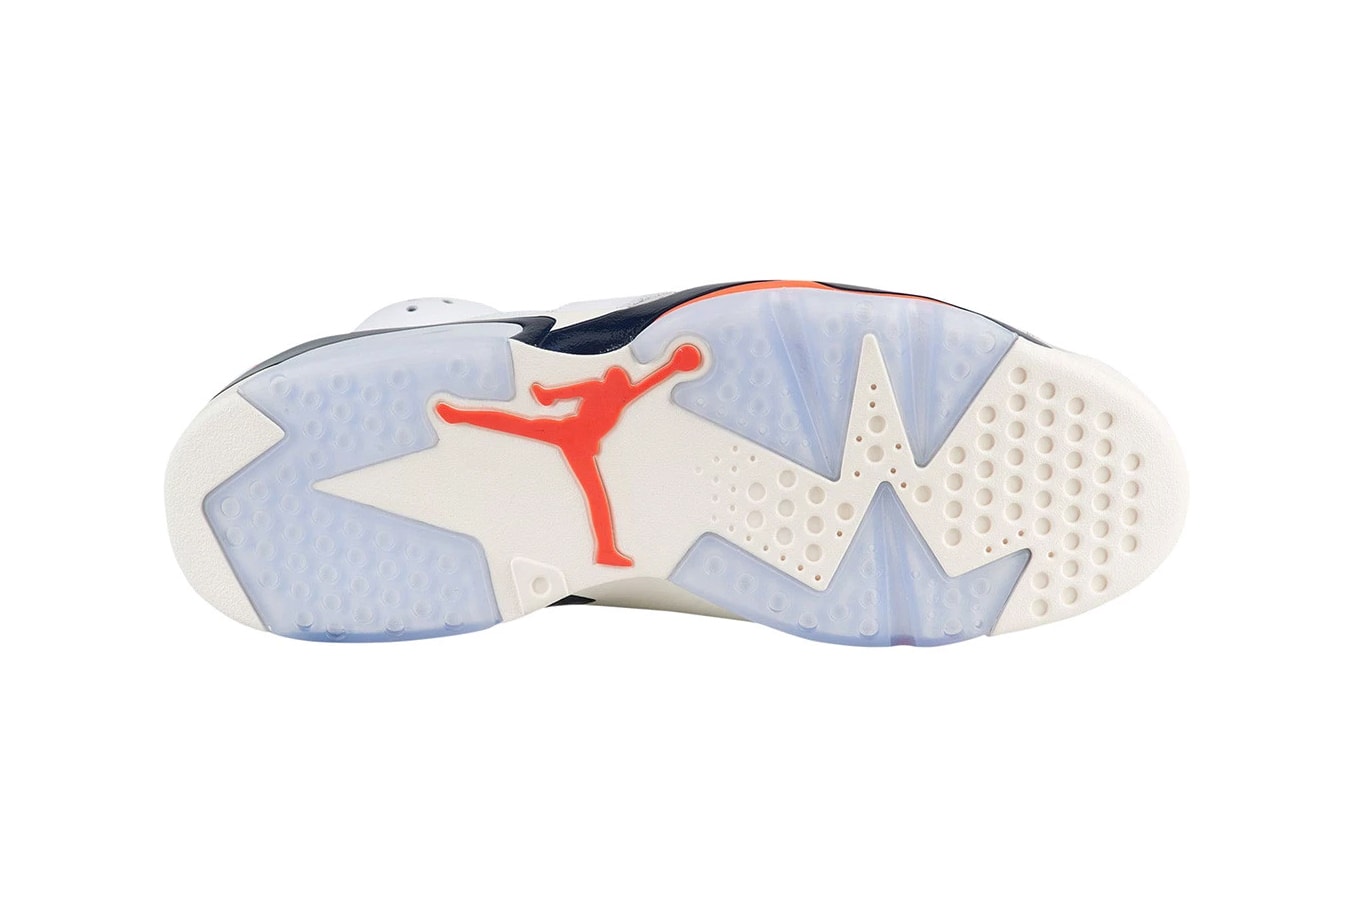 air jordan 6 tinker hatfield white infrared 23 release date sneaker price october 6 2018 drop sale sell buy blue navyorange red